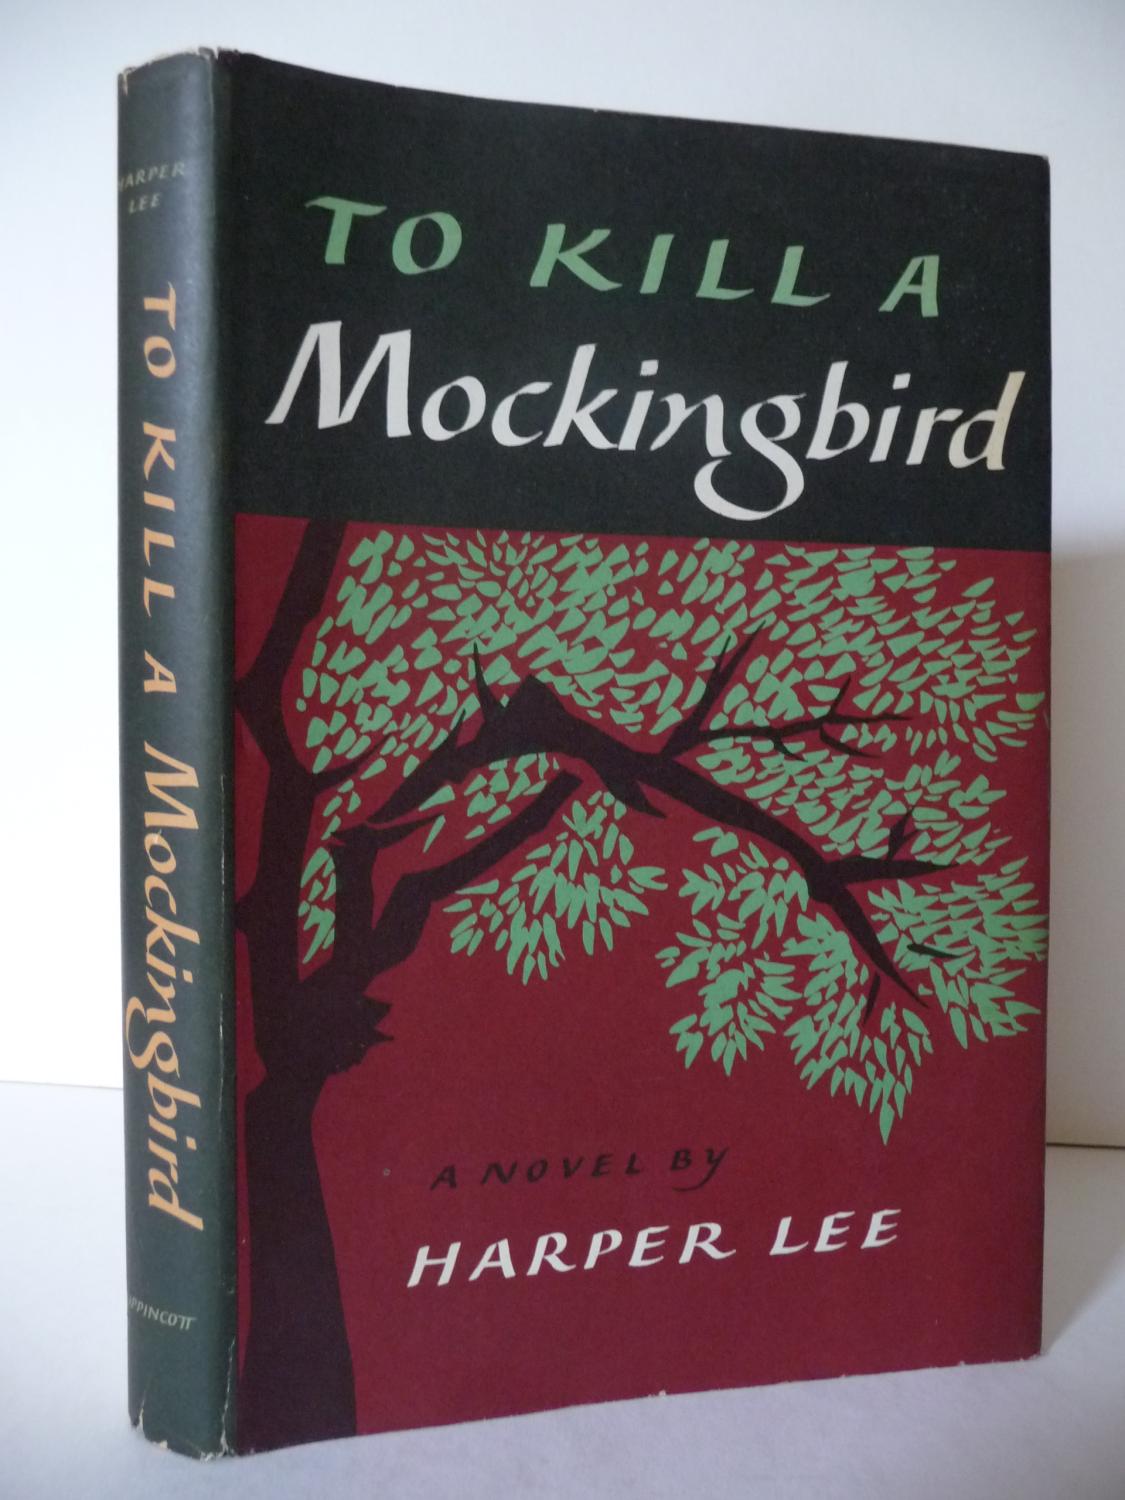 biography of harper lee to kill a mockingbird